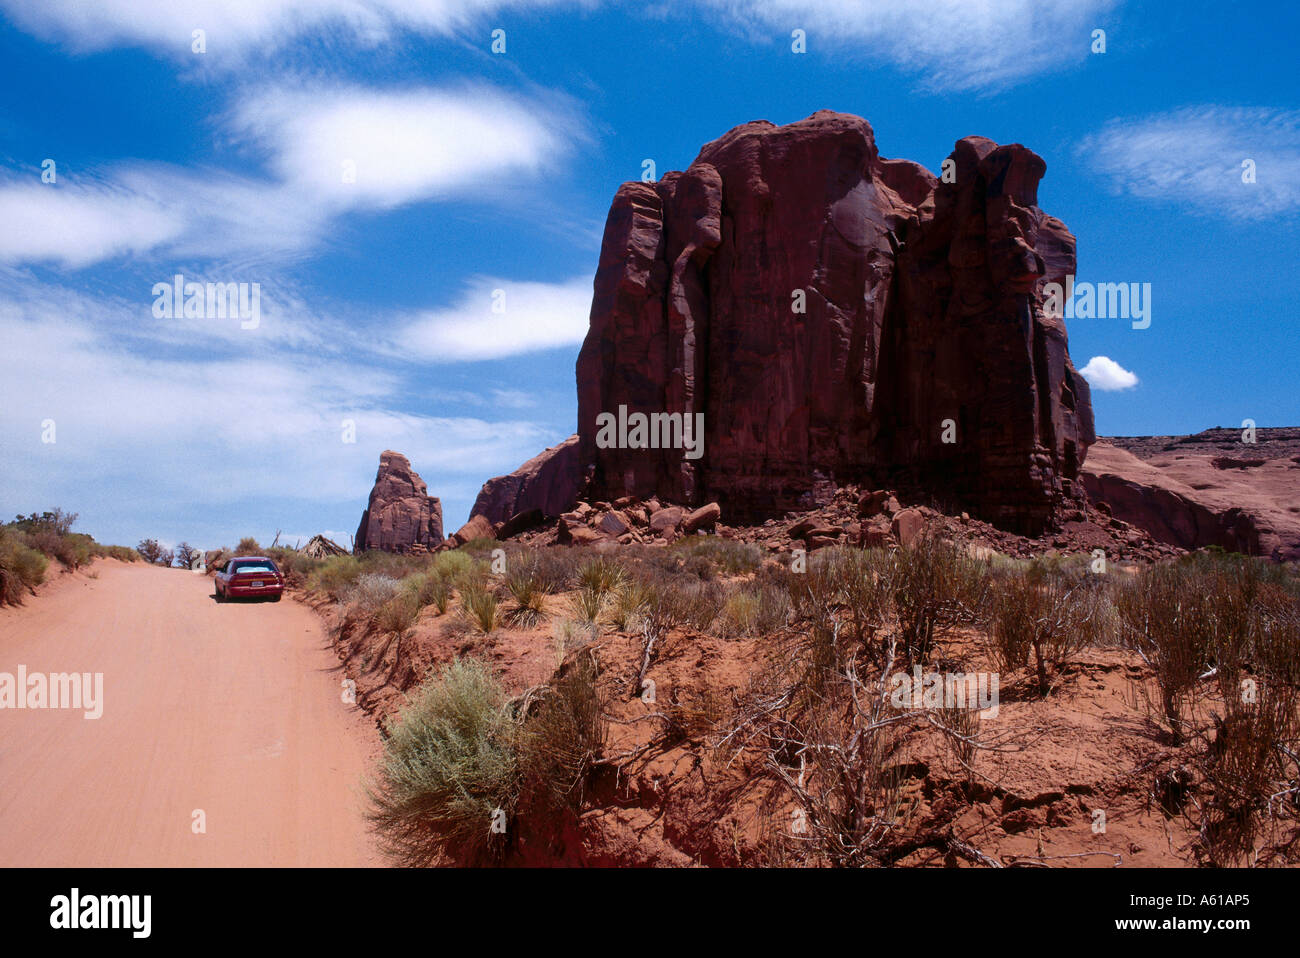 Road passing through desert, Spearhead Mesa, Monument Valley, Arizona, USA Stock Photo